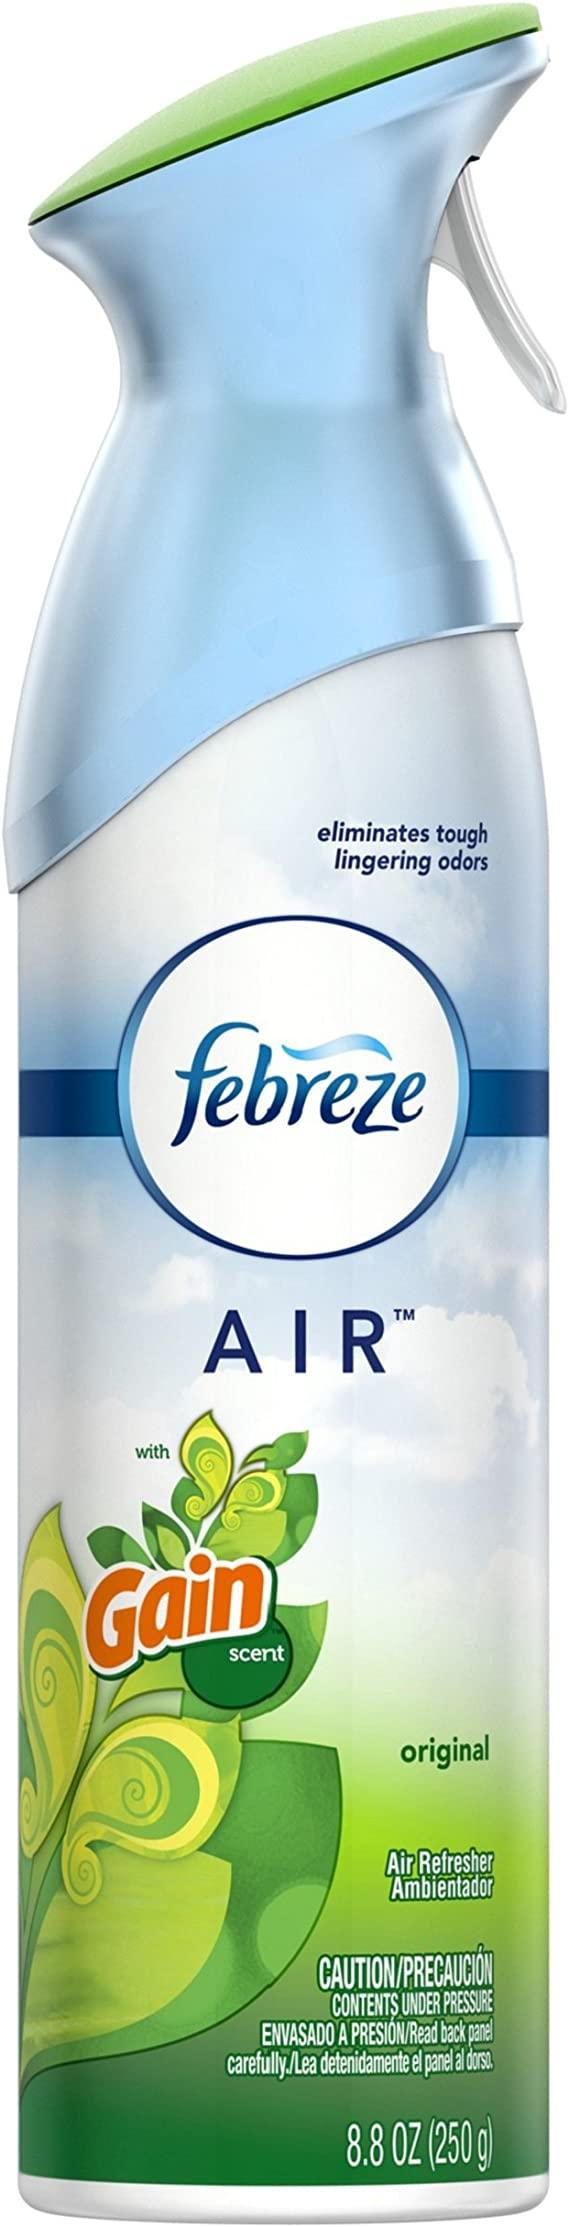 Febreze Air Freshner - Gain Original (250g) - Quecan